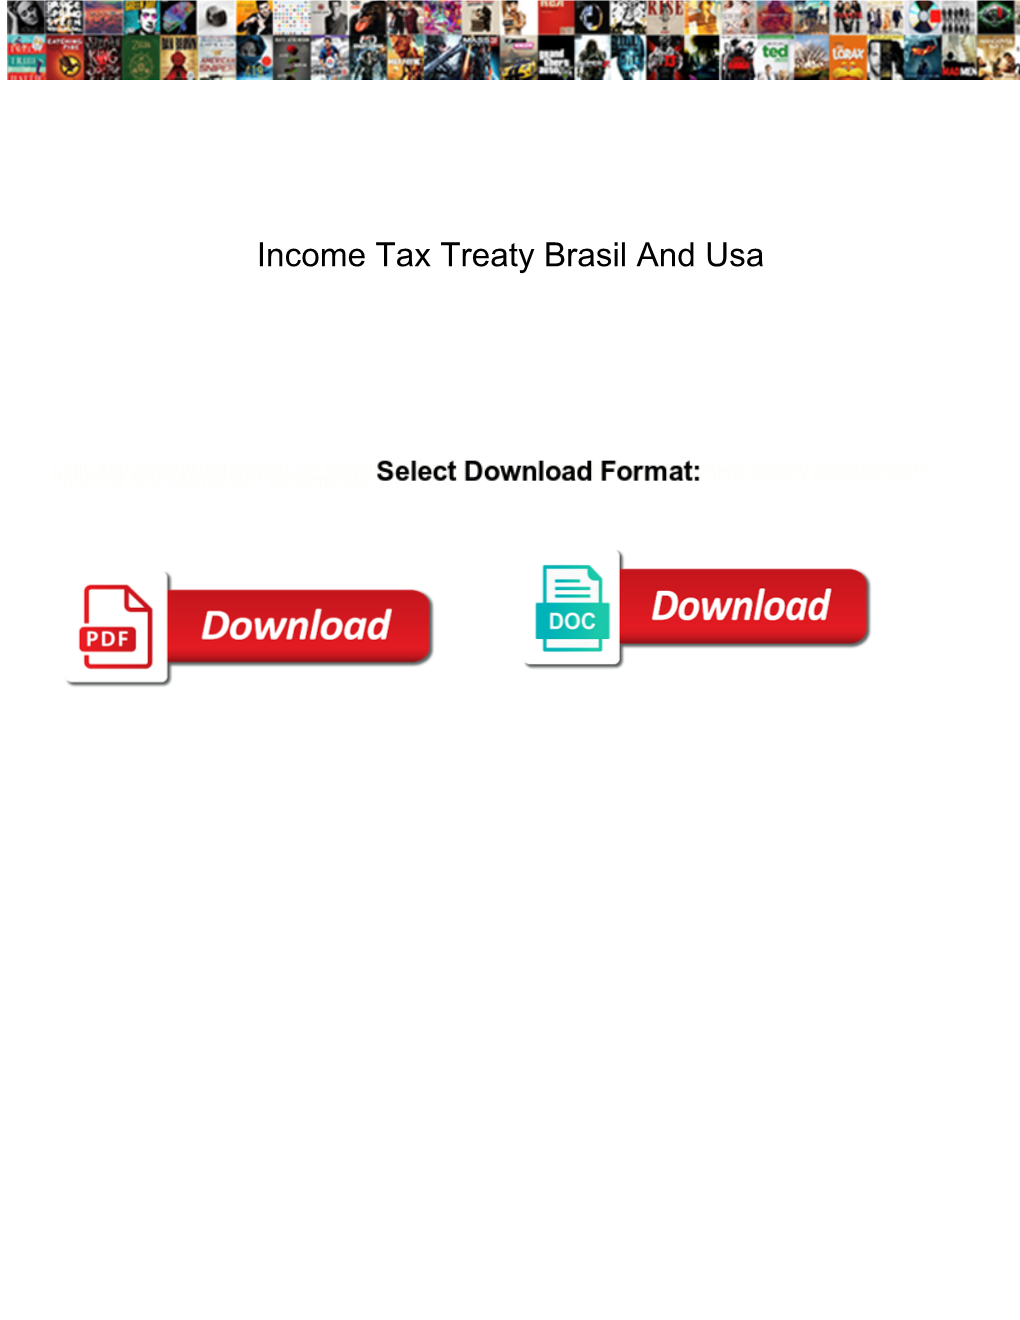 Income Tax Treaty Brasil and Usa